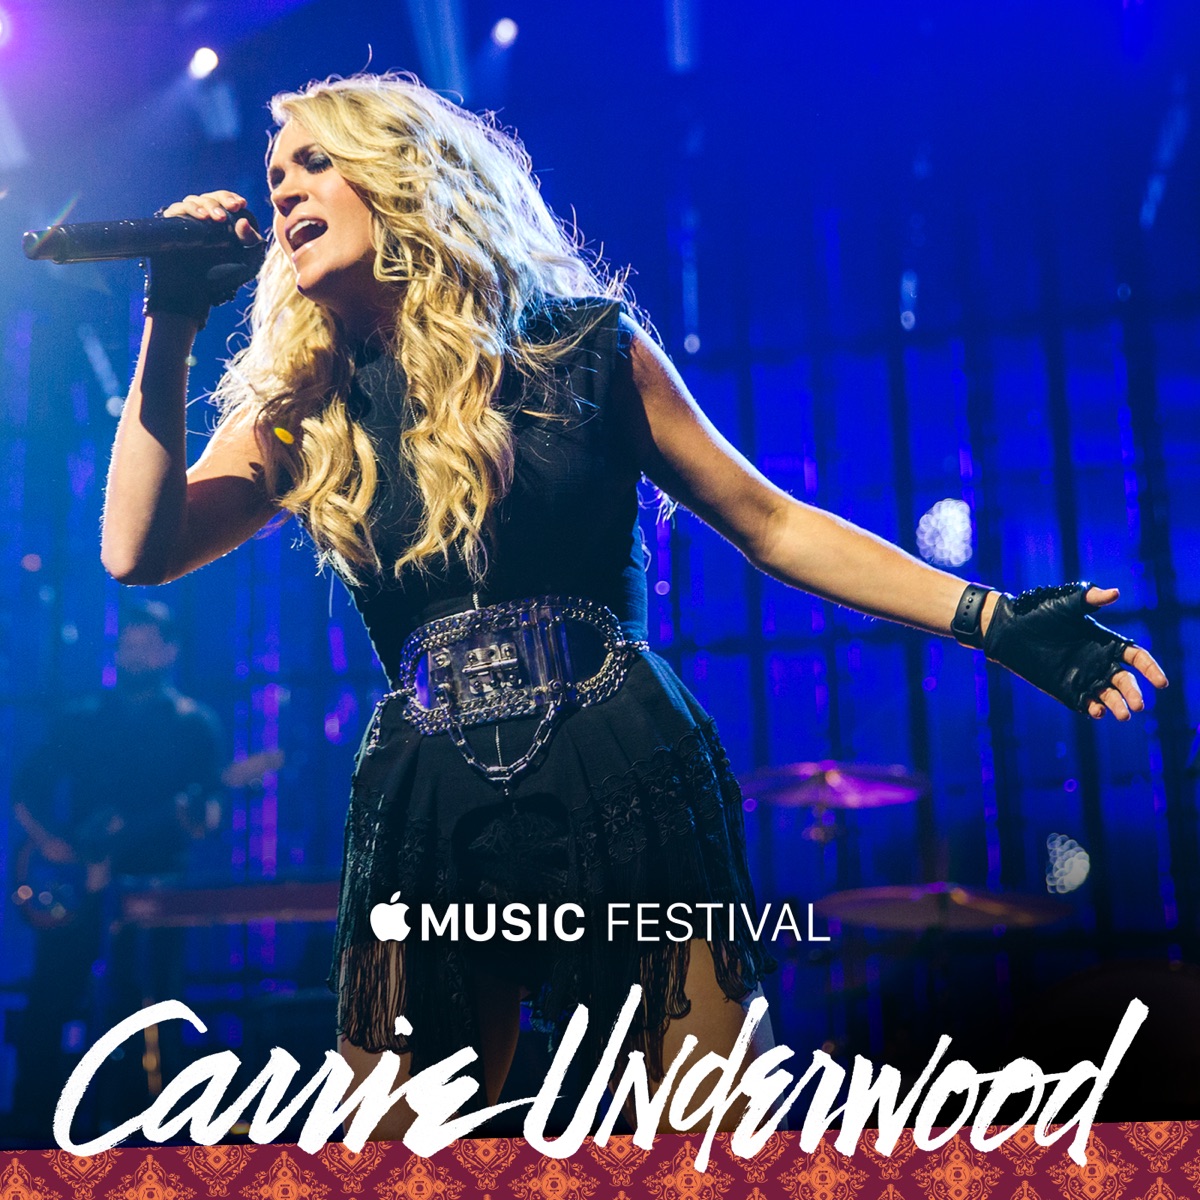 Carrie Underwood - Denim & Rhinestones[Deluxe Edition] 